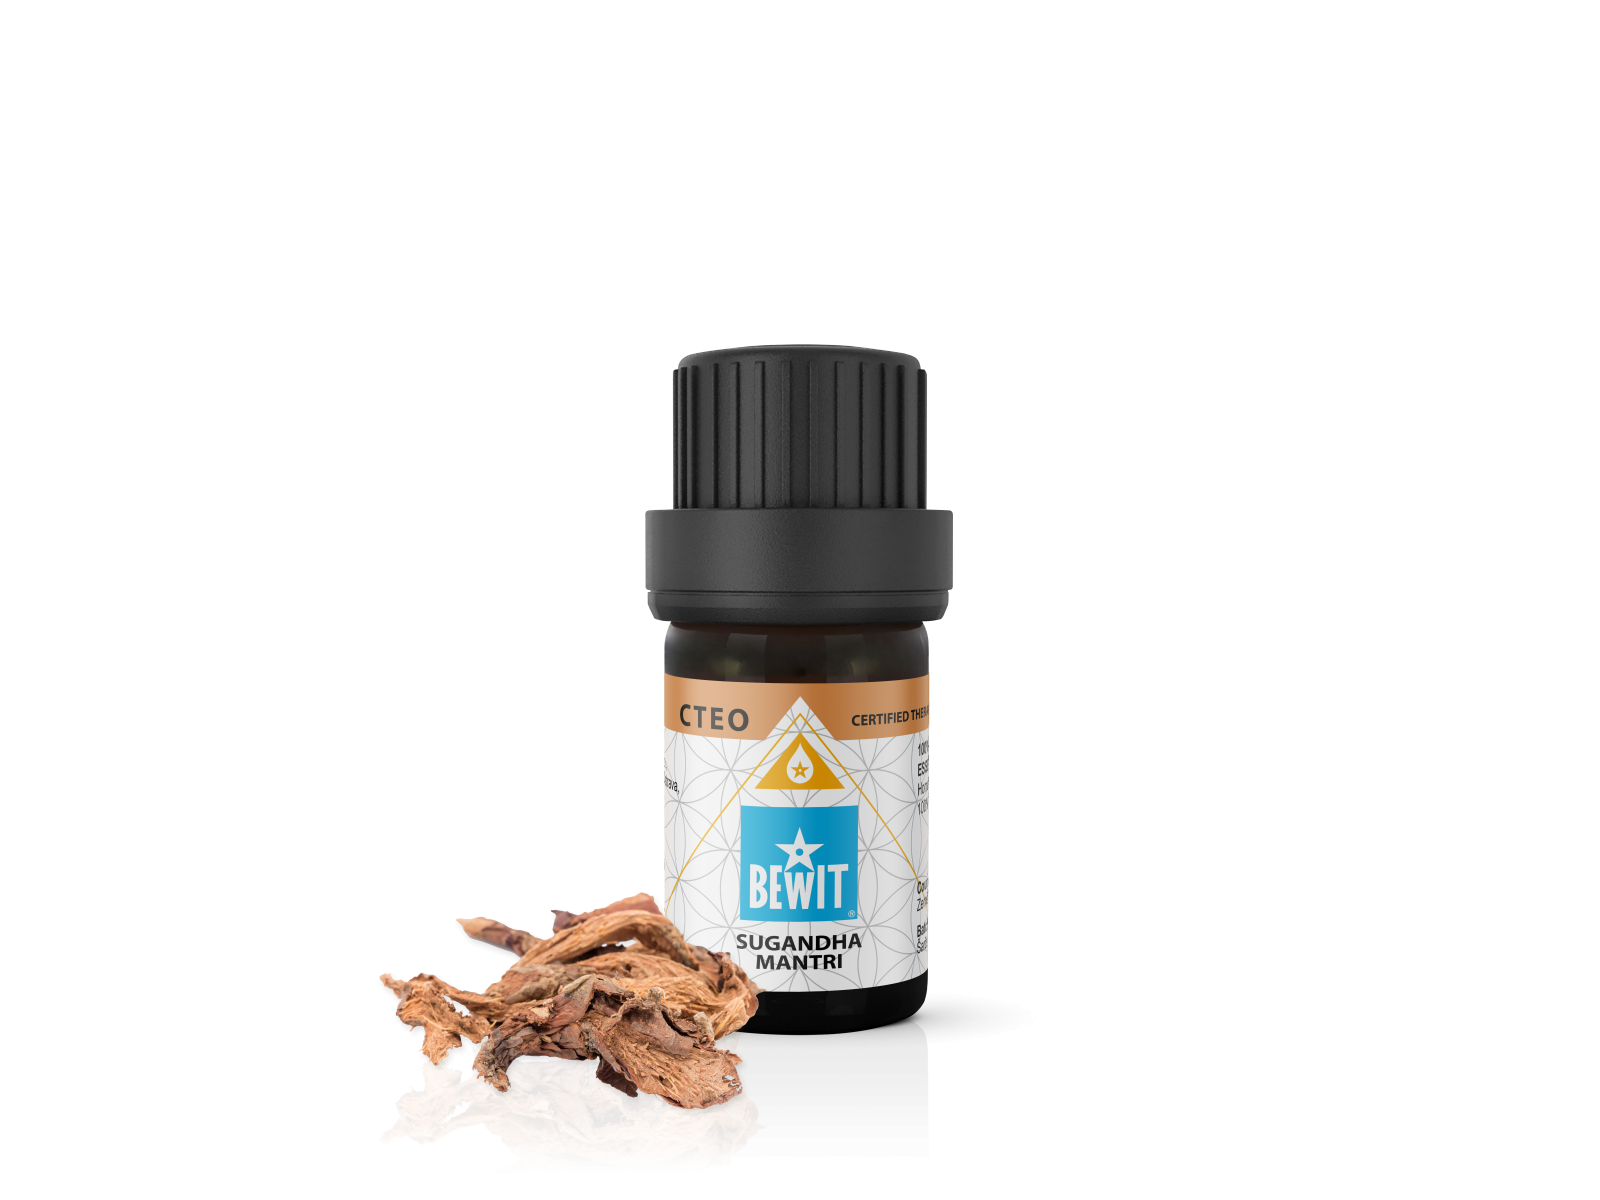 BEWIT Sugandha Mantri - 100% pure essential oil